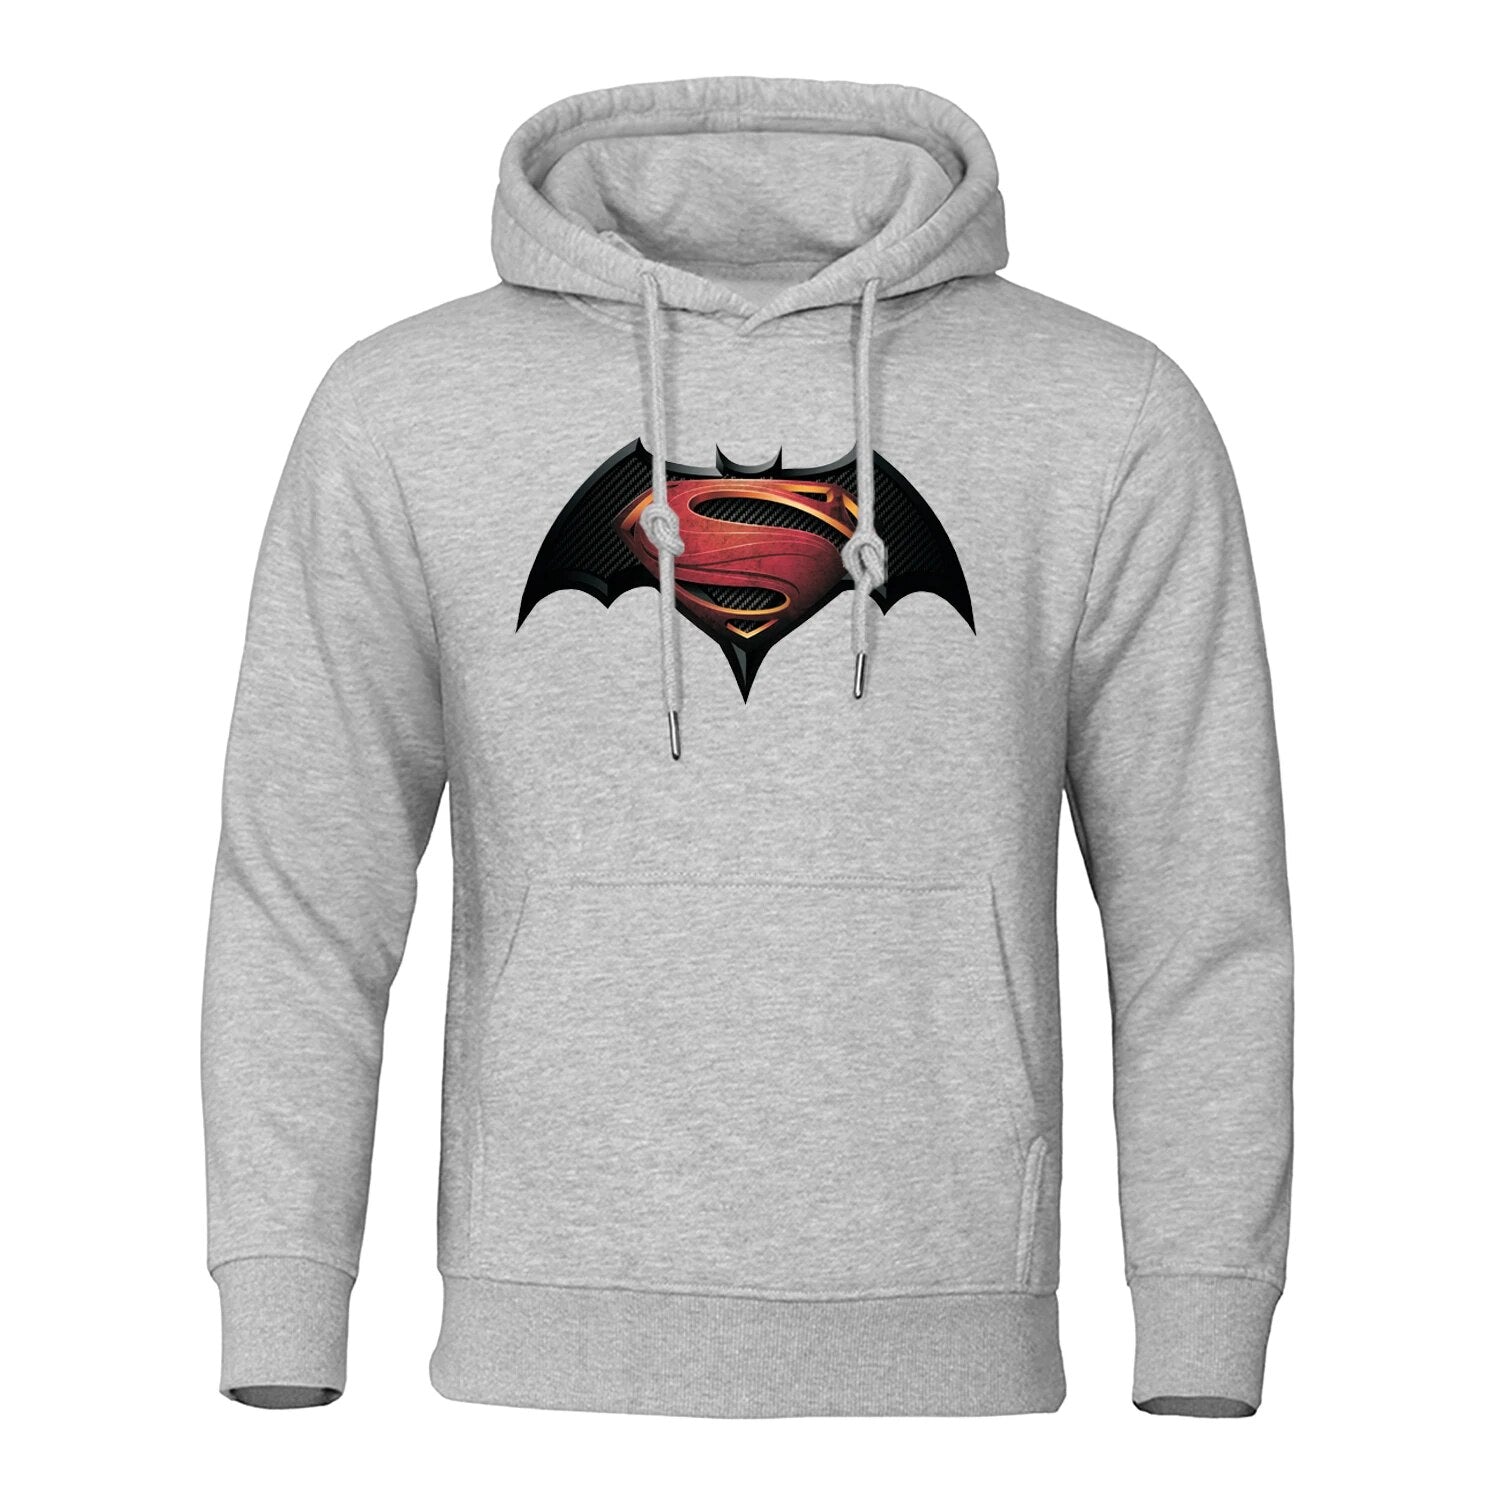 Superman / Batman - Super-Bat Hoodie - Men's Casual Streetwear-Gray1-S-